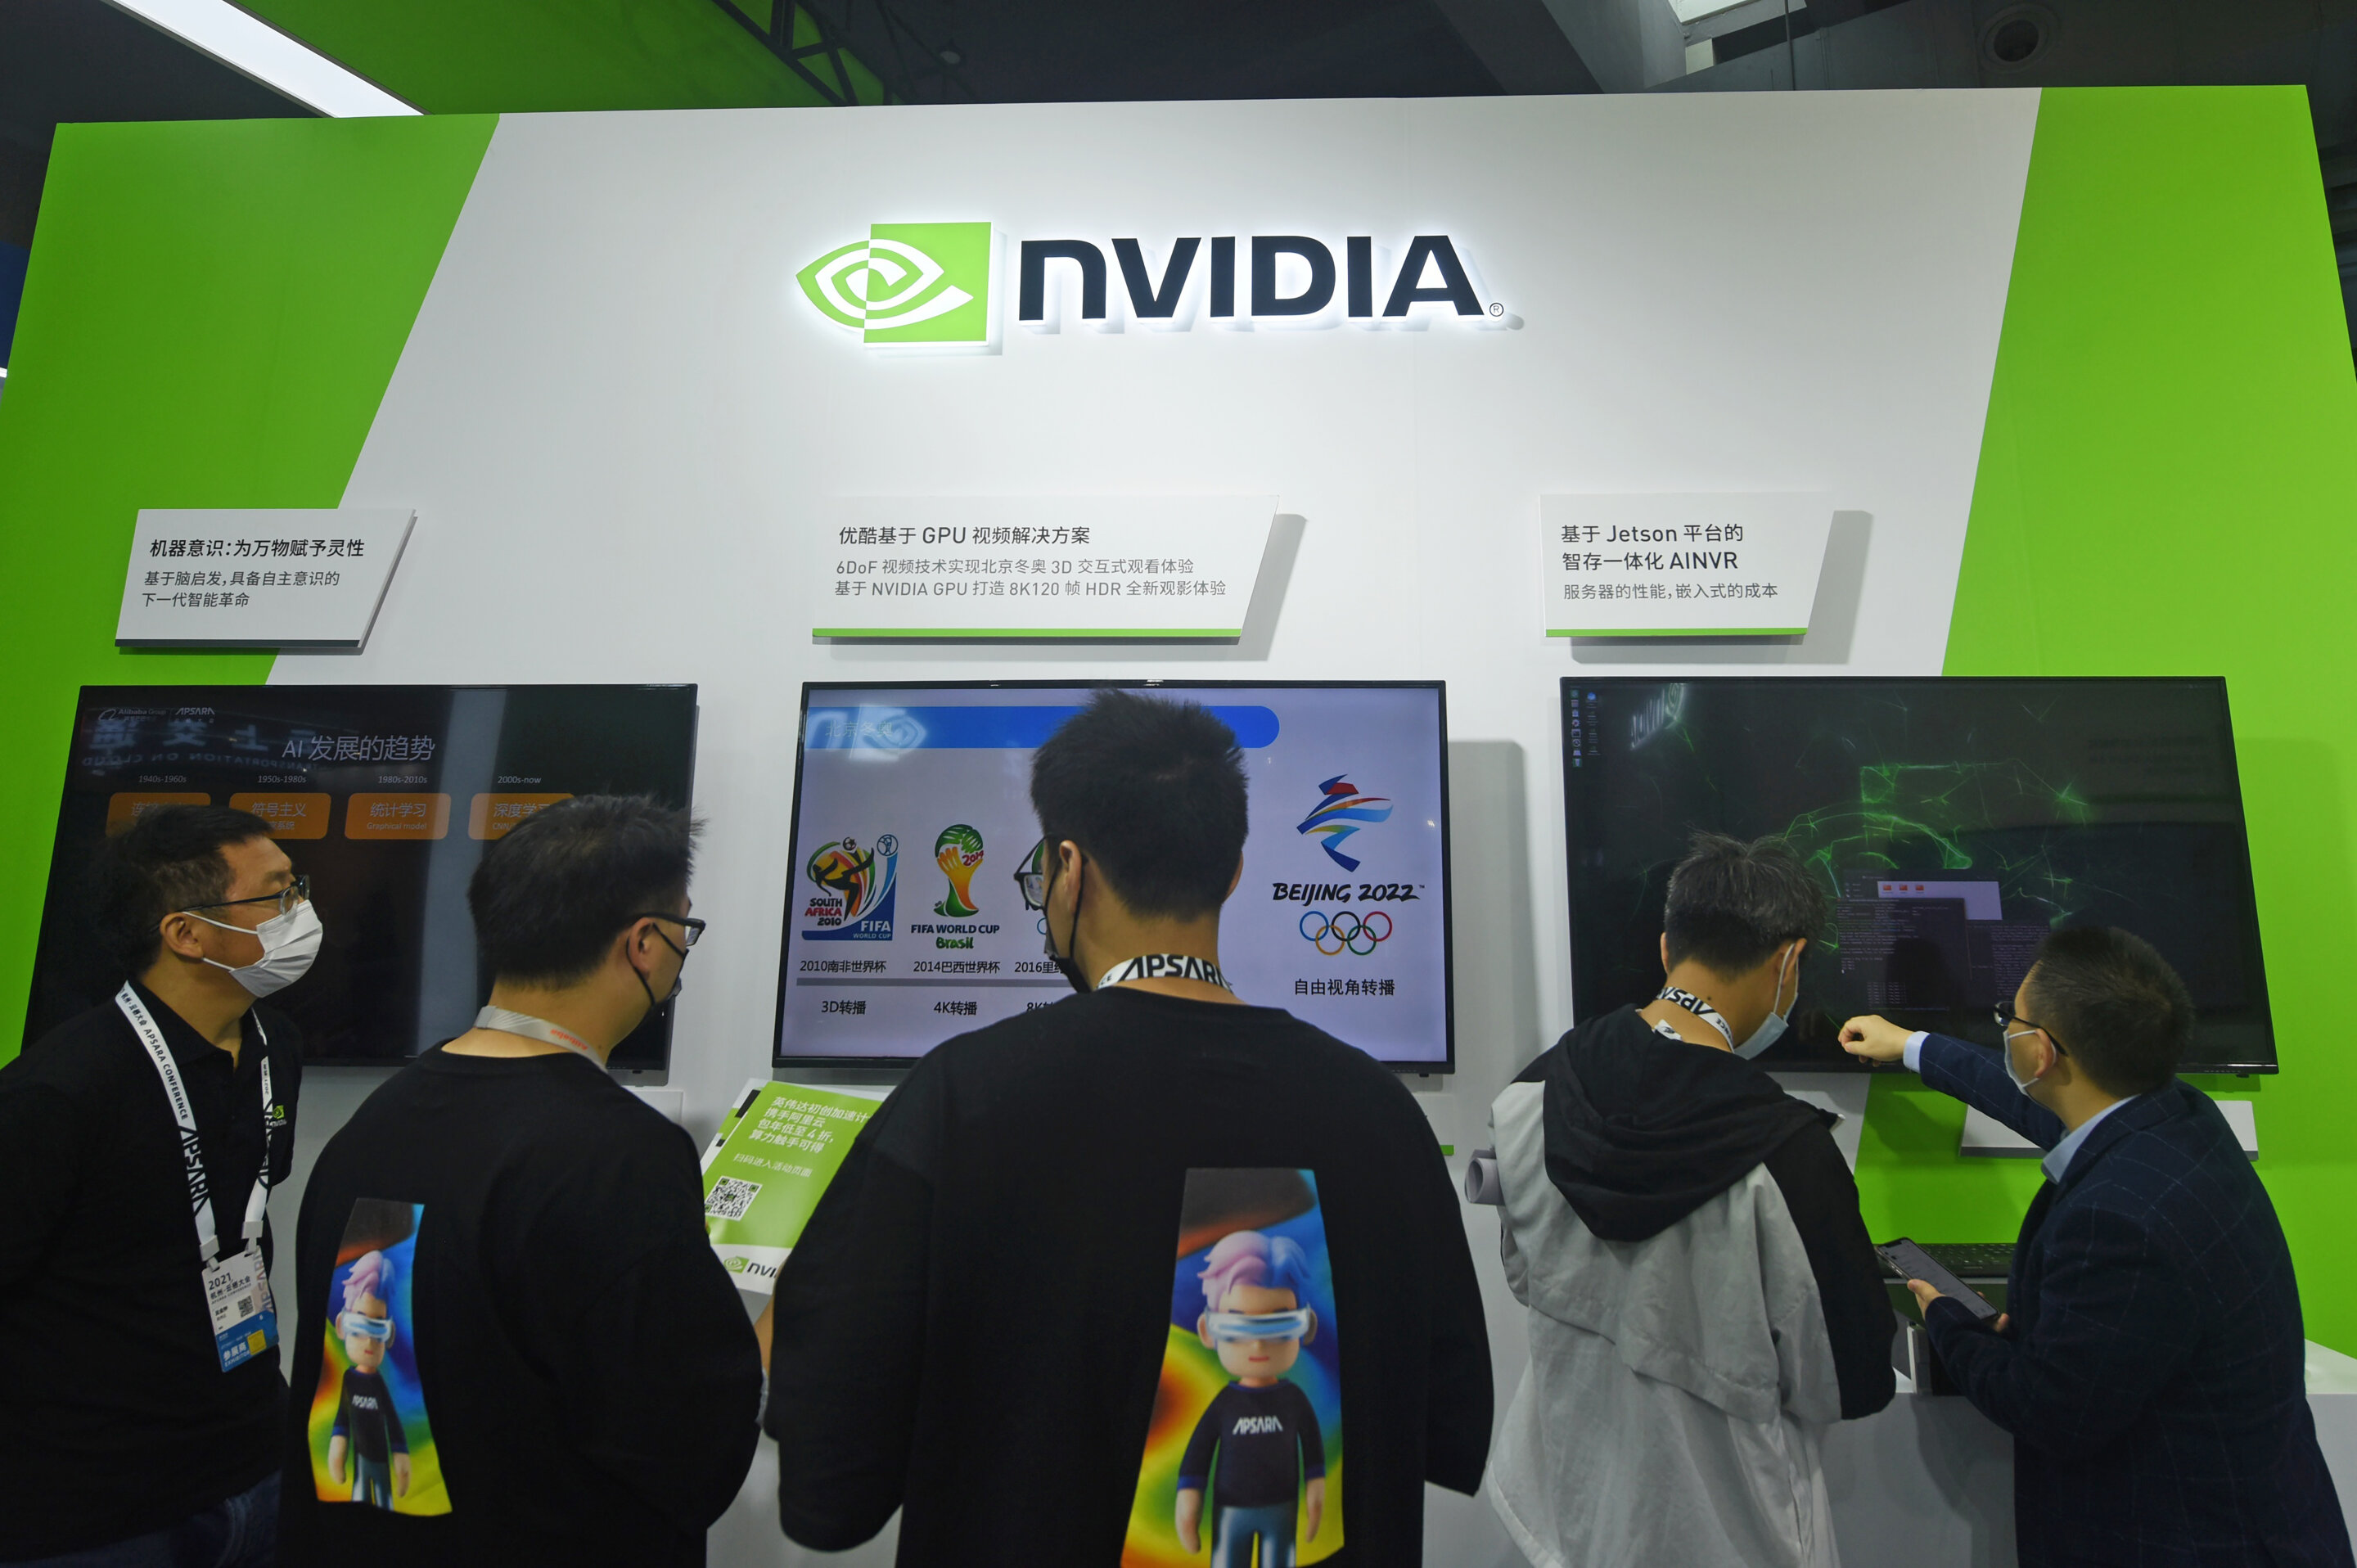 #China demands US drop tech export curbs after Nvidia warning